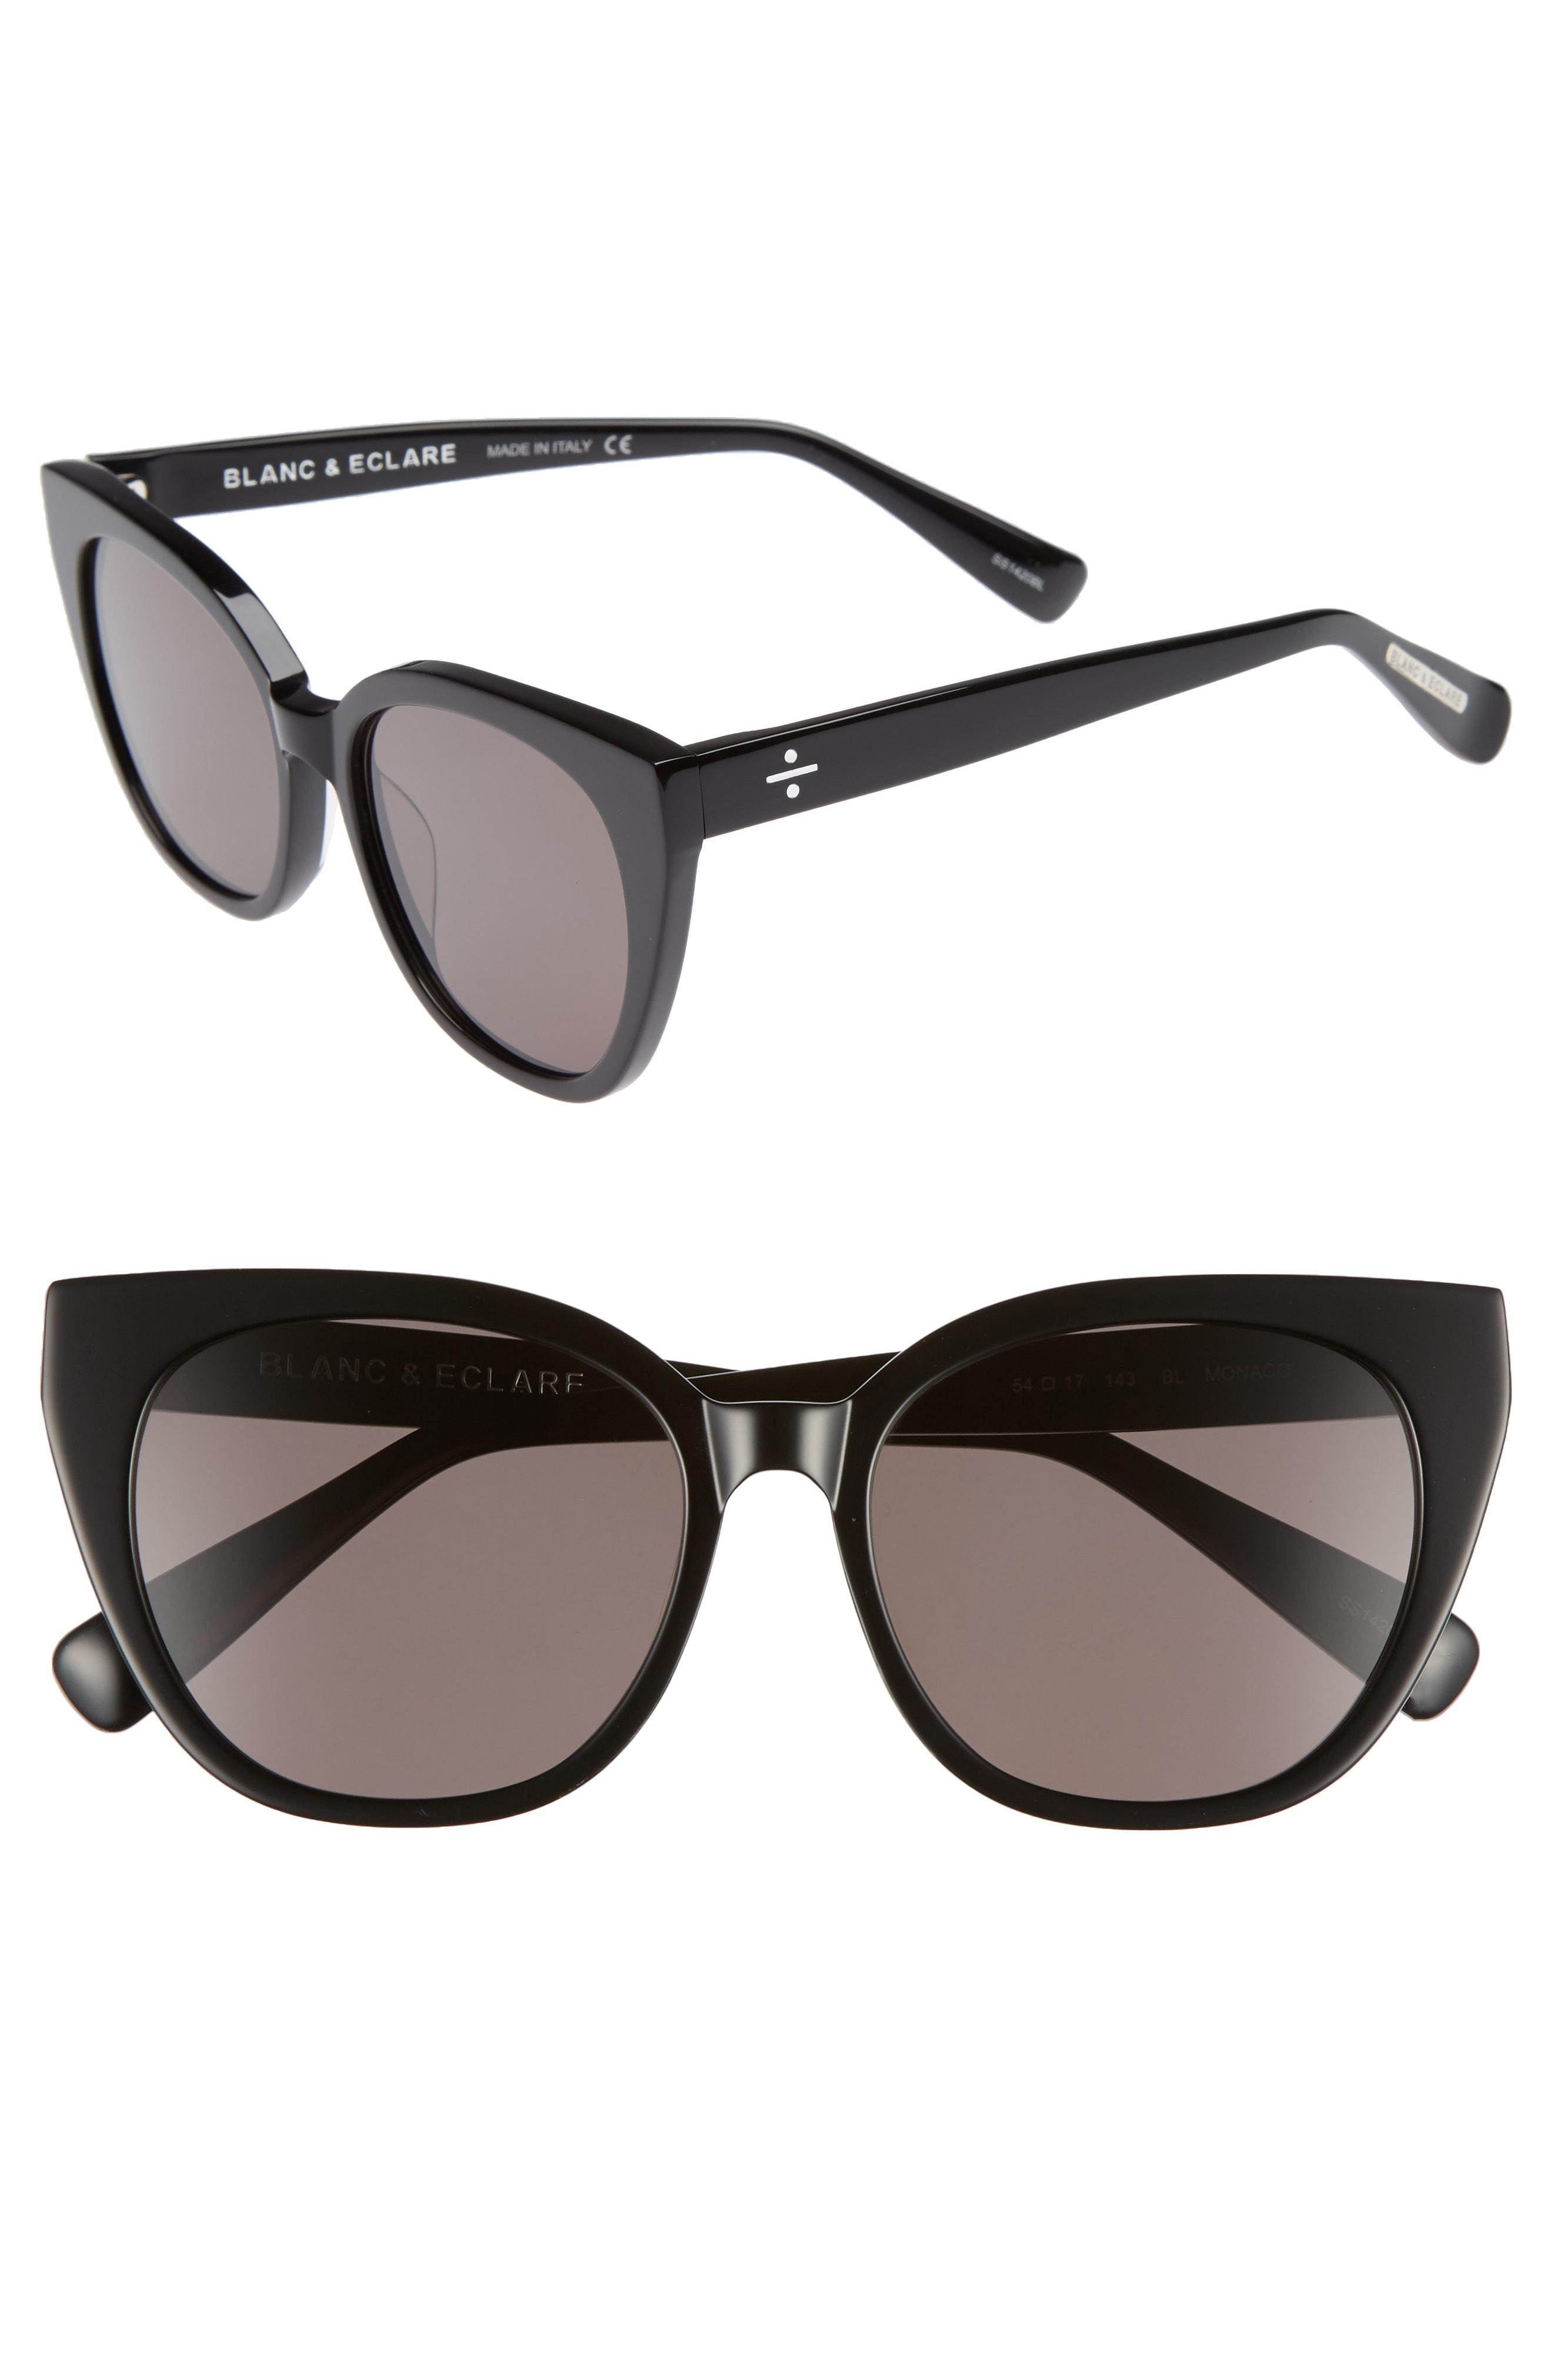 Lyst - Blanc & Eclare Monaco 54mm Cat Eye Sunglasses in Black